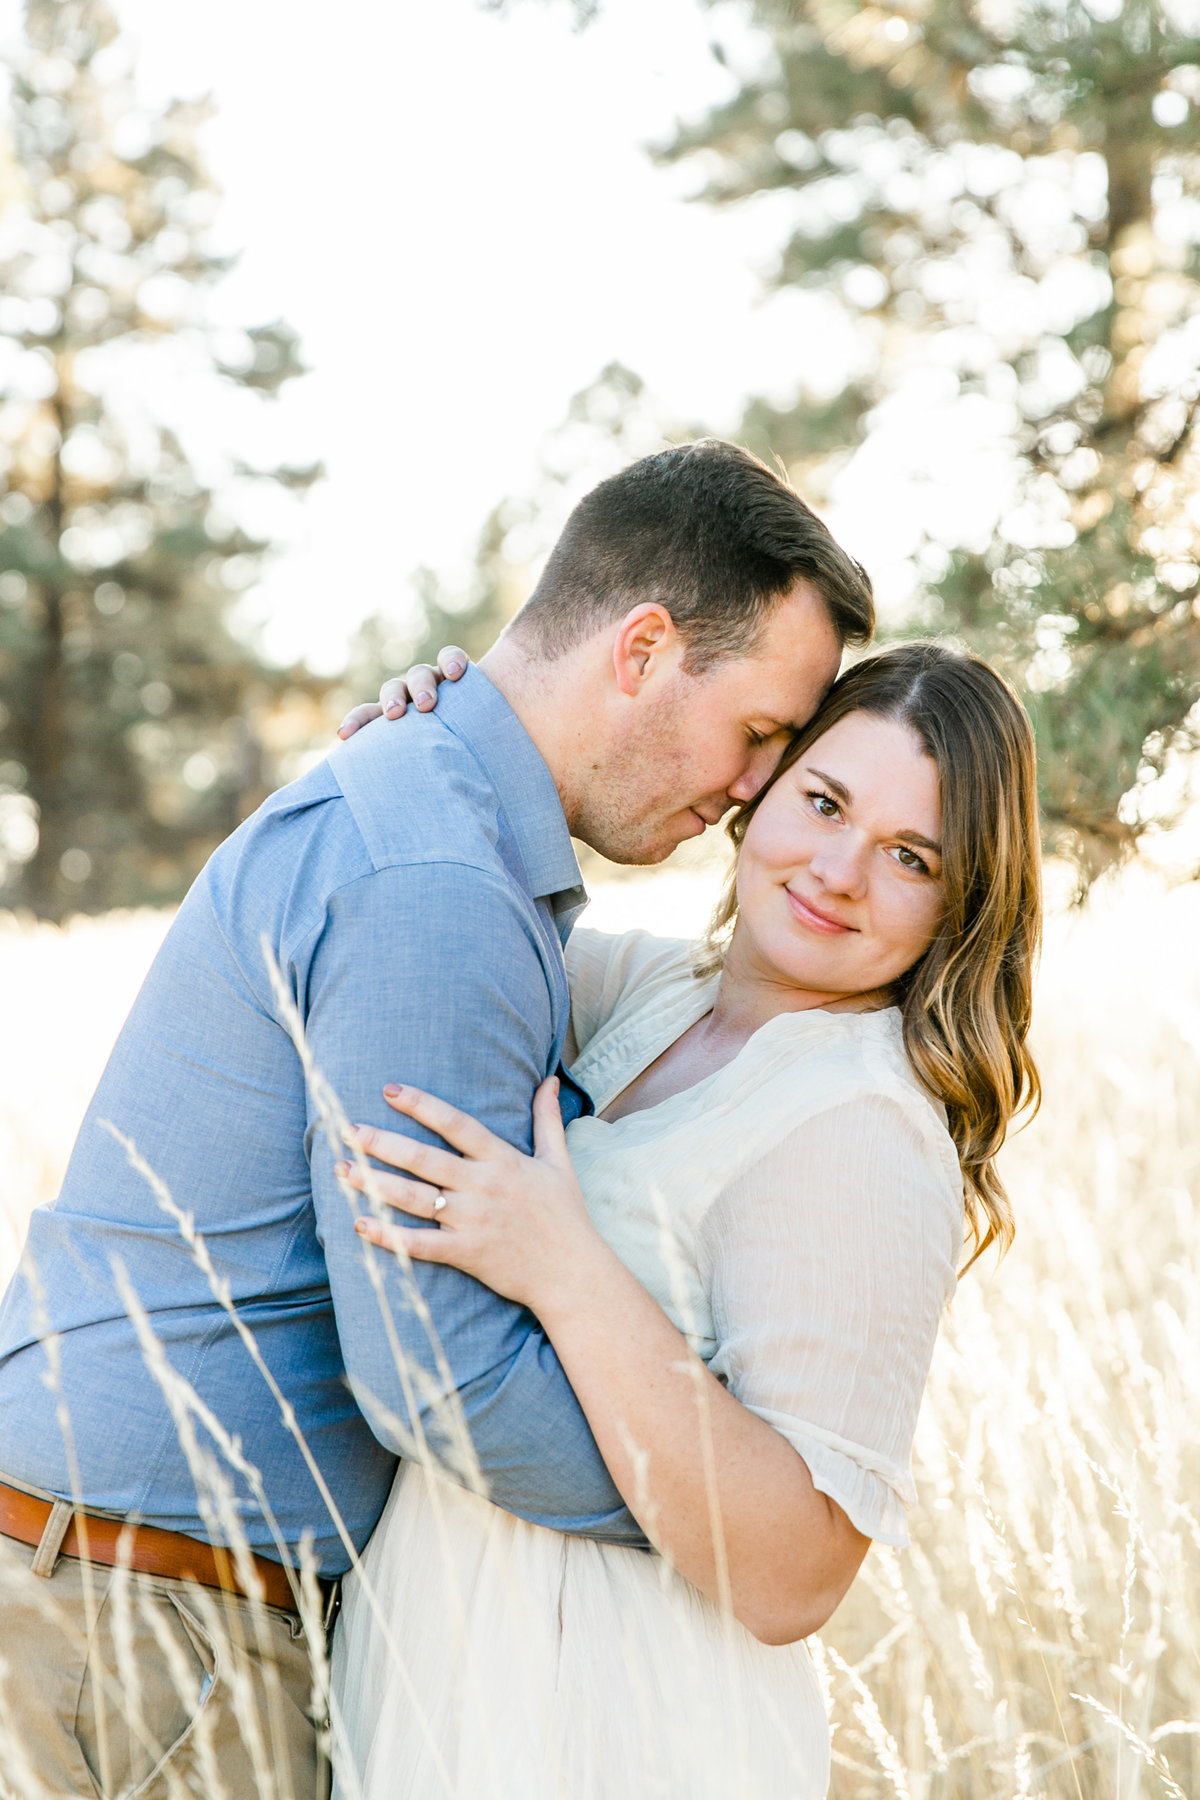 Karlie Colleen Photography - Flagstaff Arizona Engagement Photographer - Britt & Josh -151